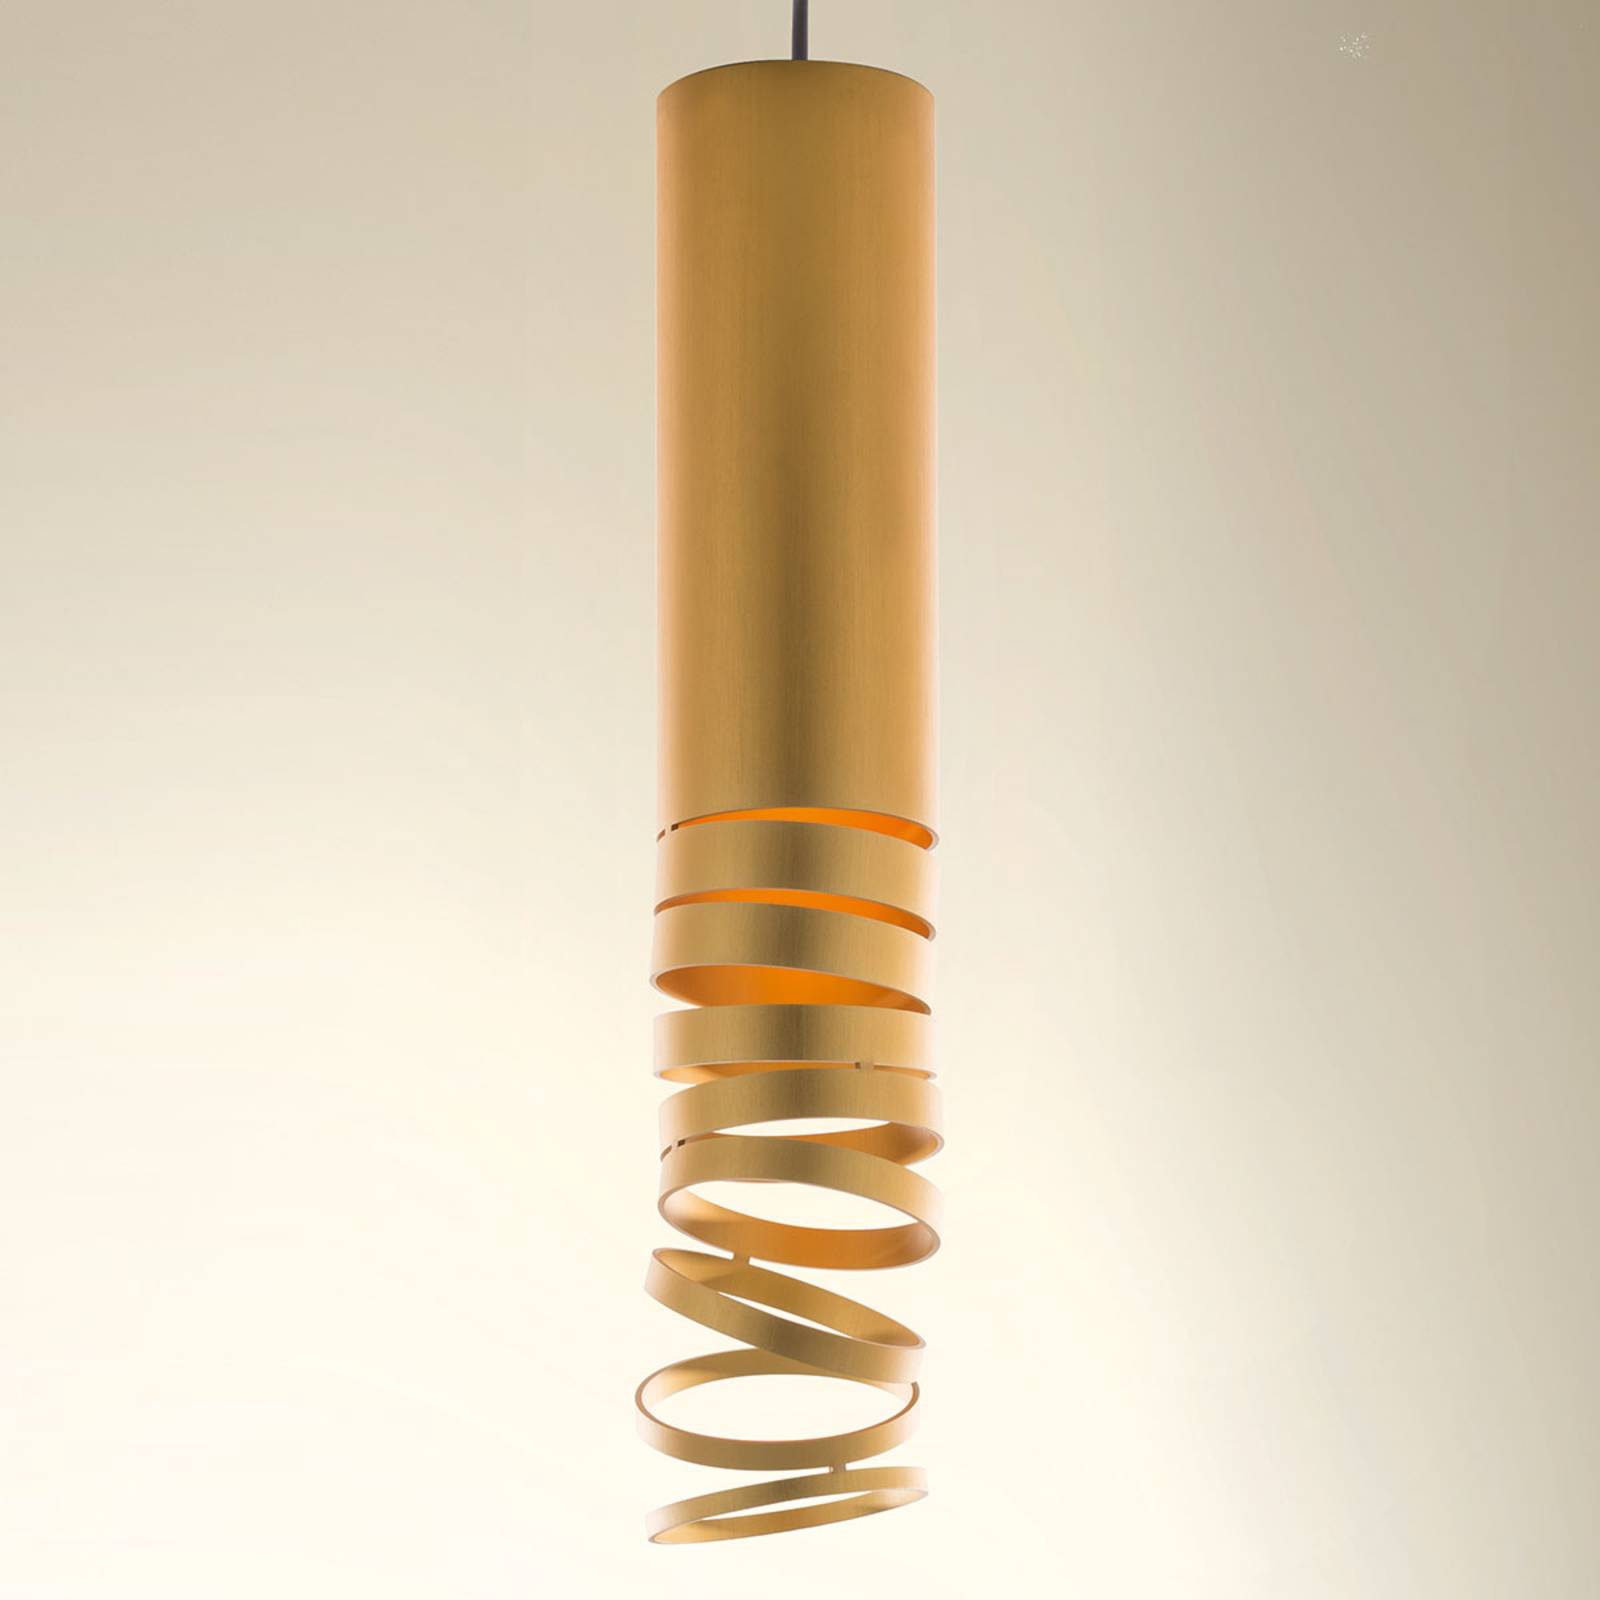 Artemide decomposé függő lámpa arany